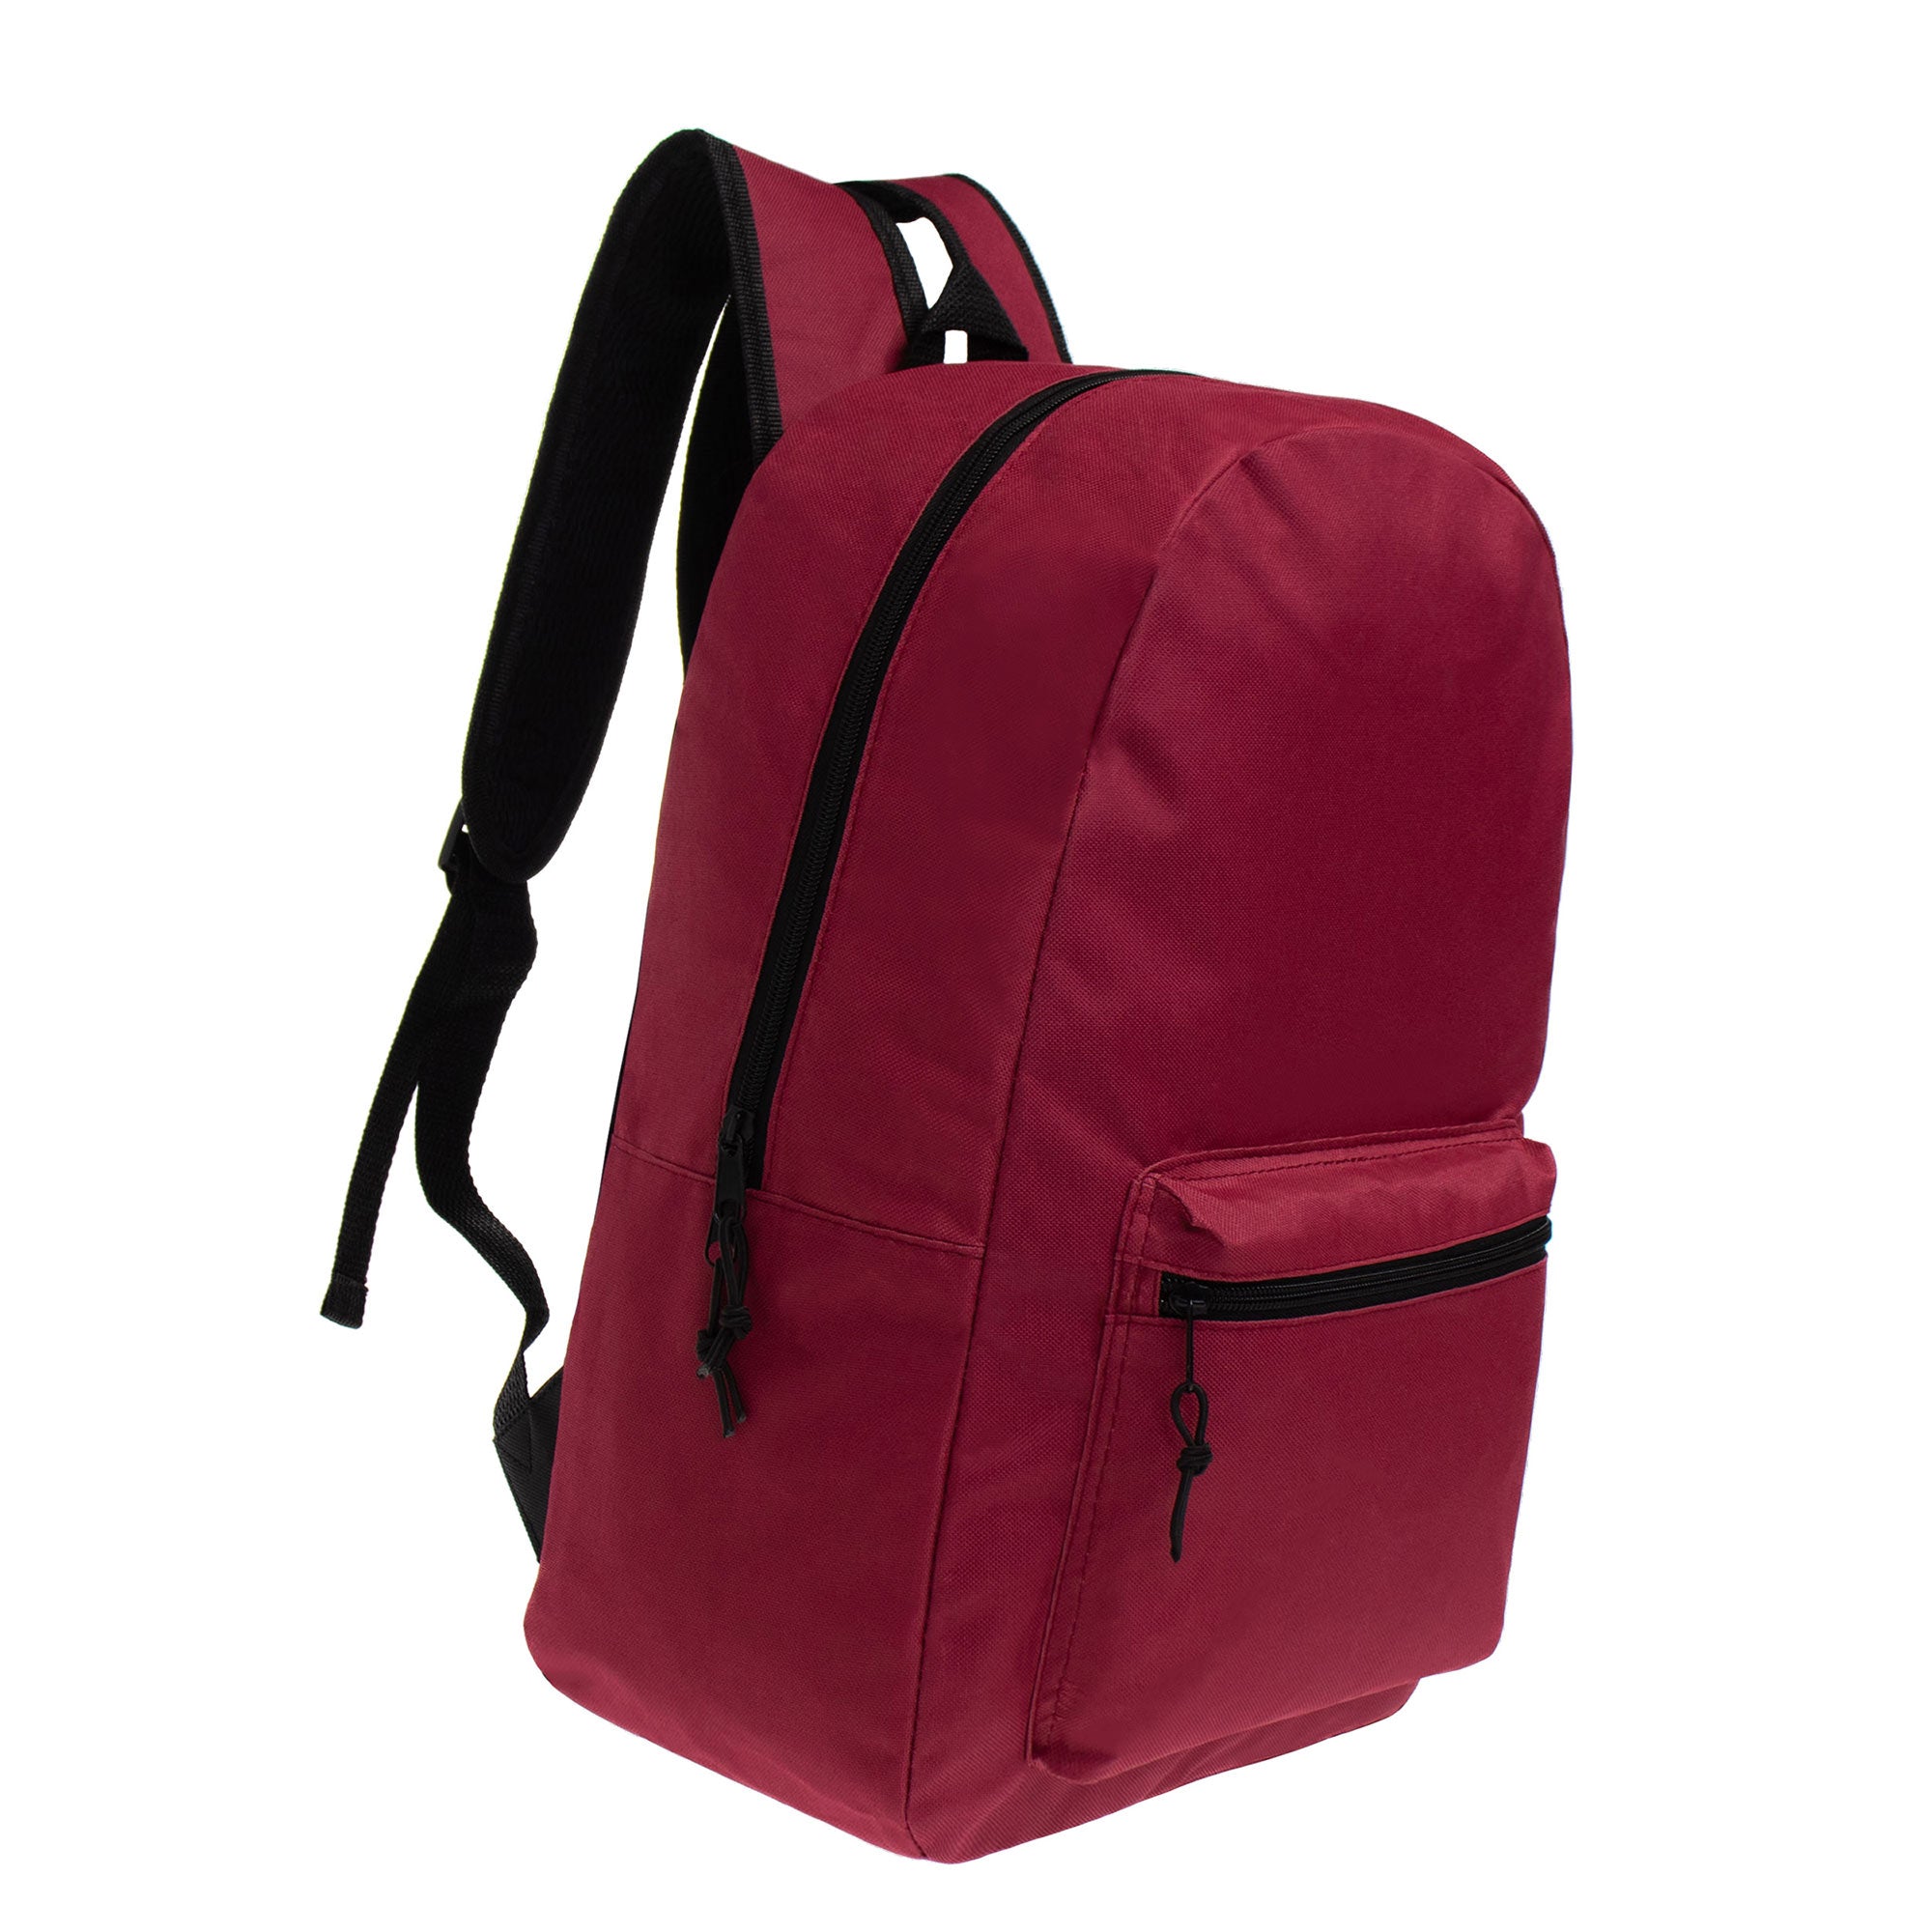 15 inch wholesale backpack bulk discounts